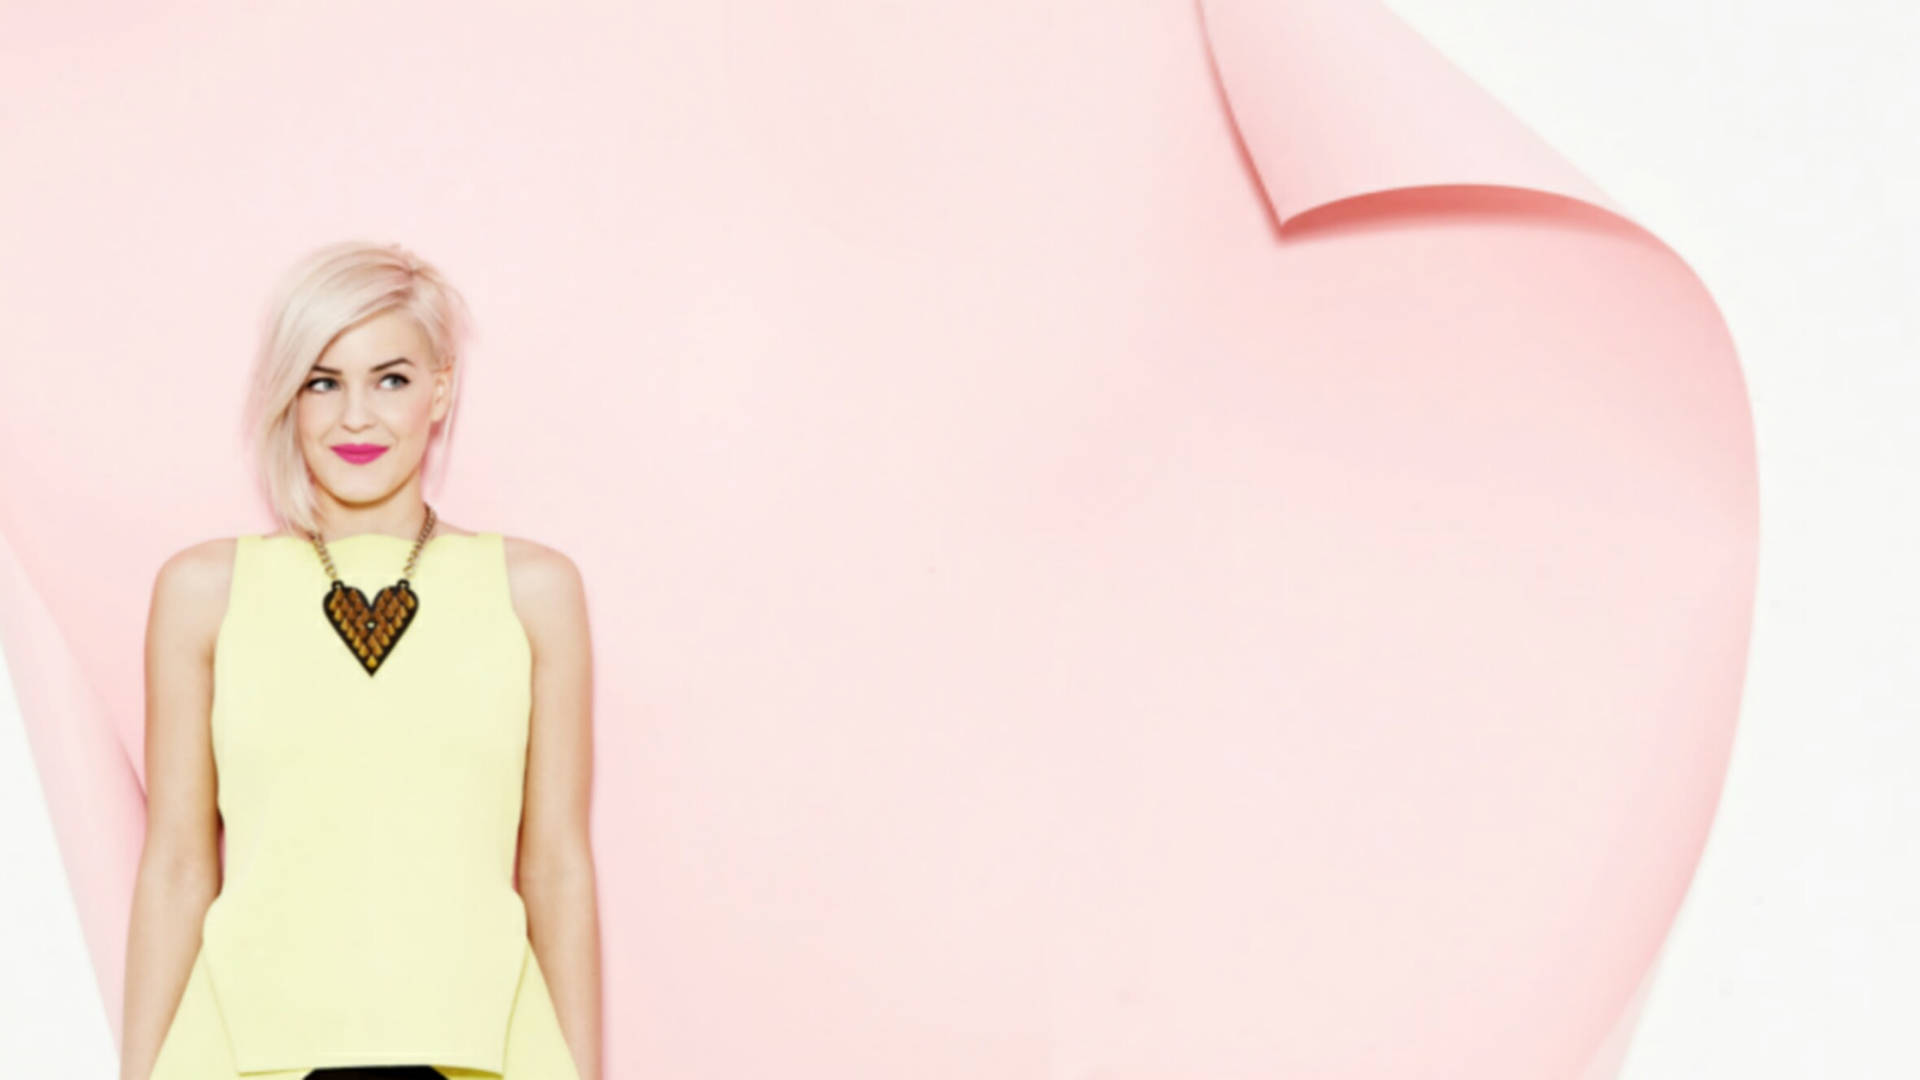 Anne-marie Cute Pink Background